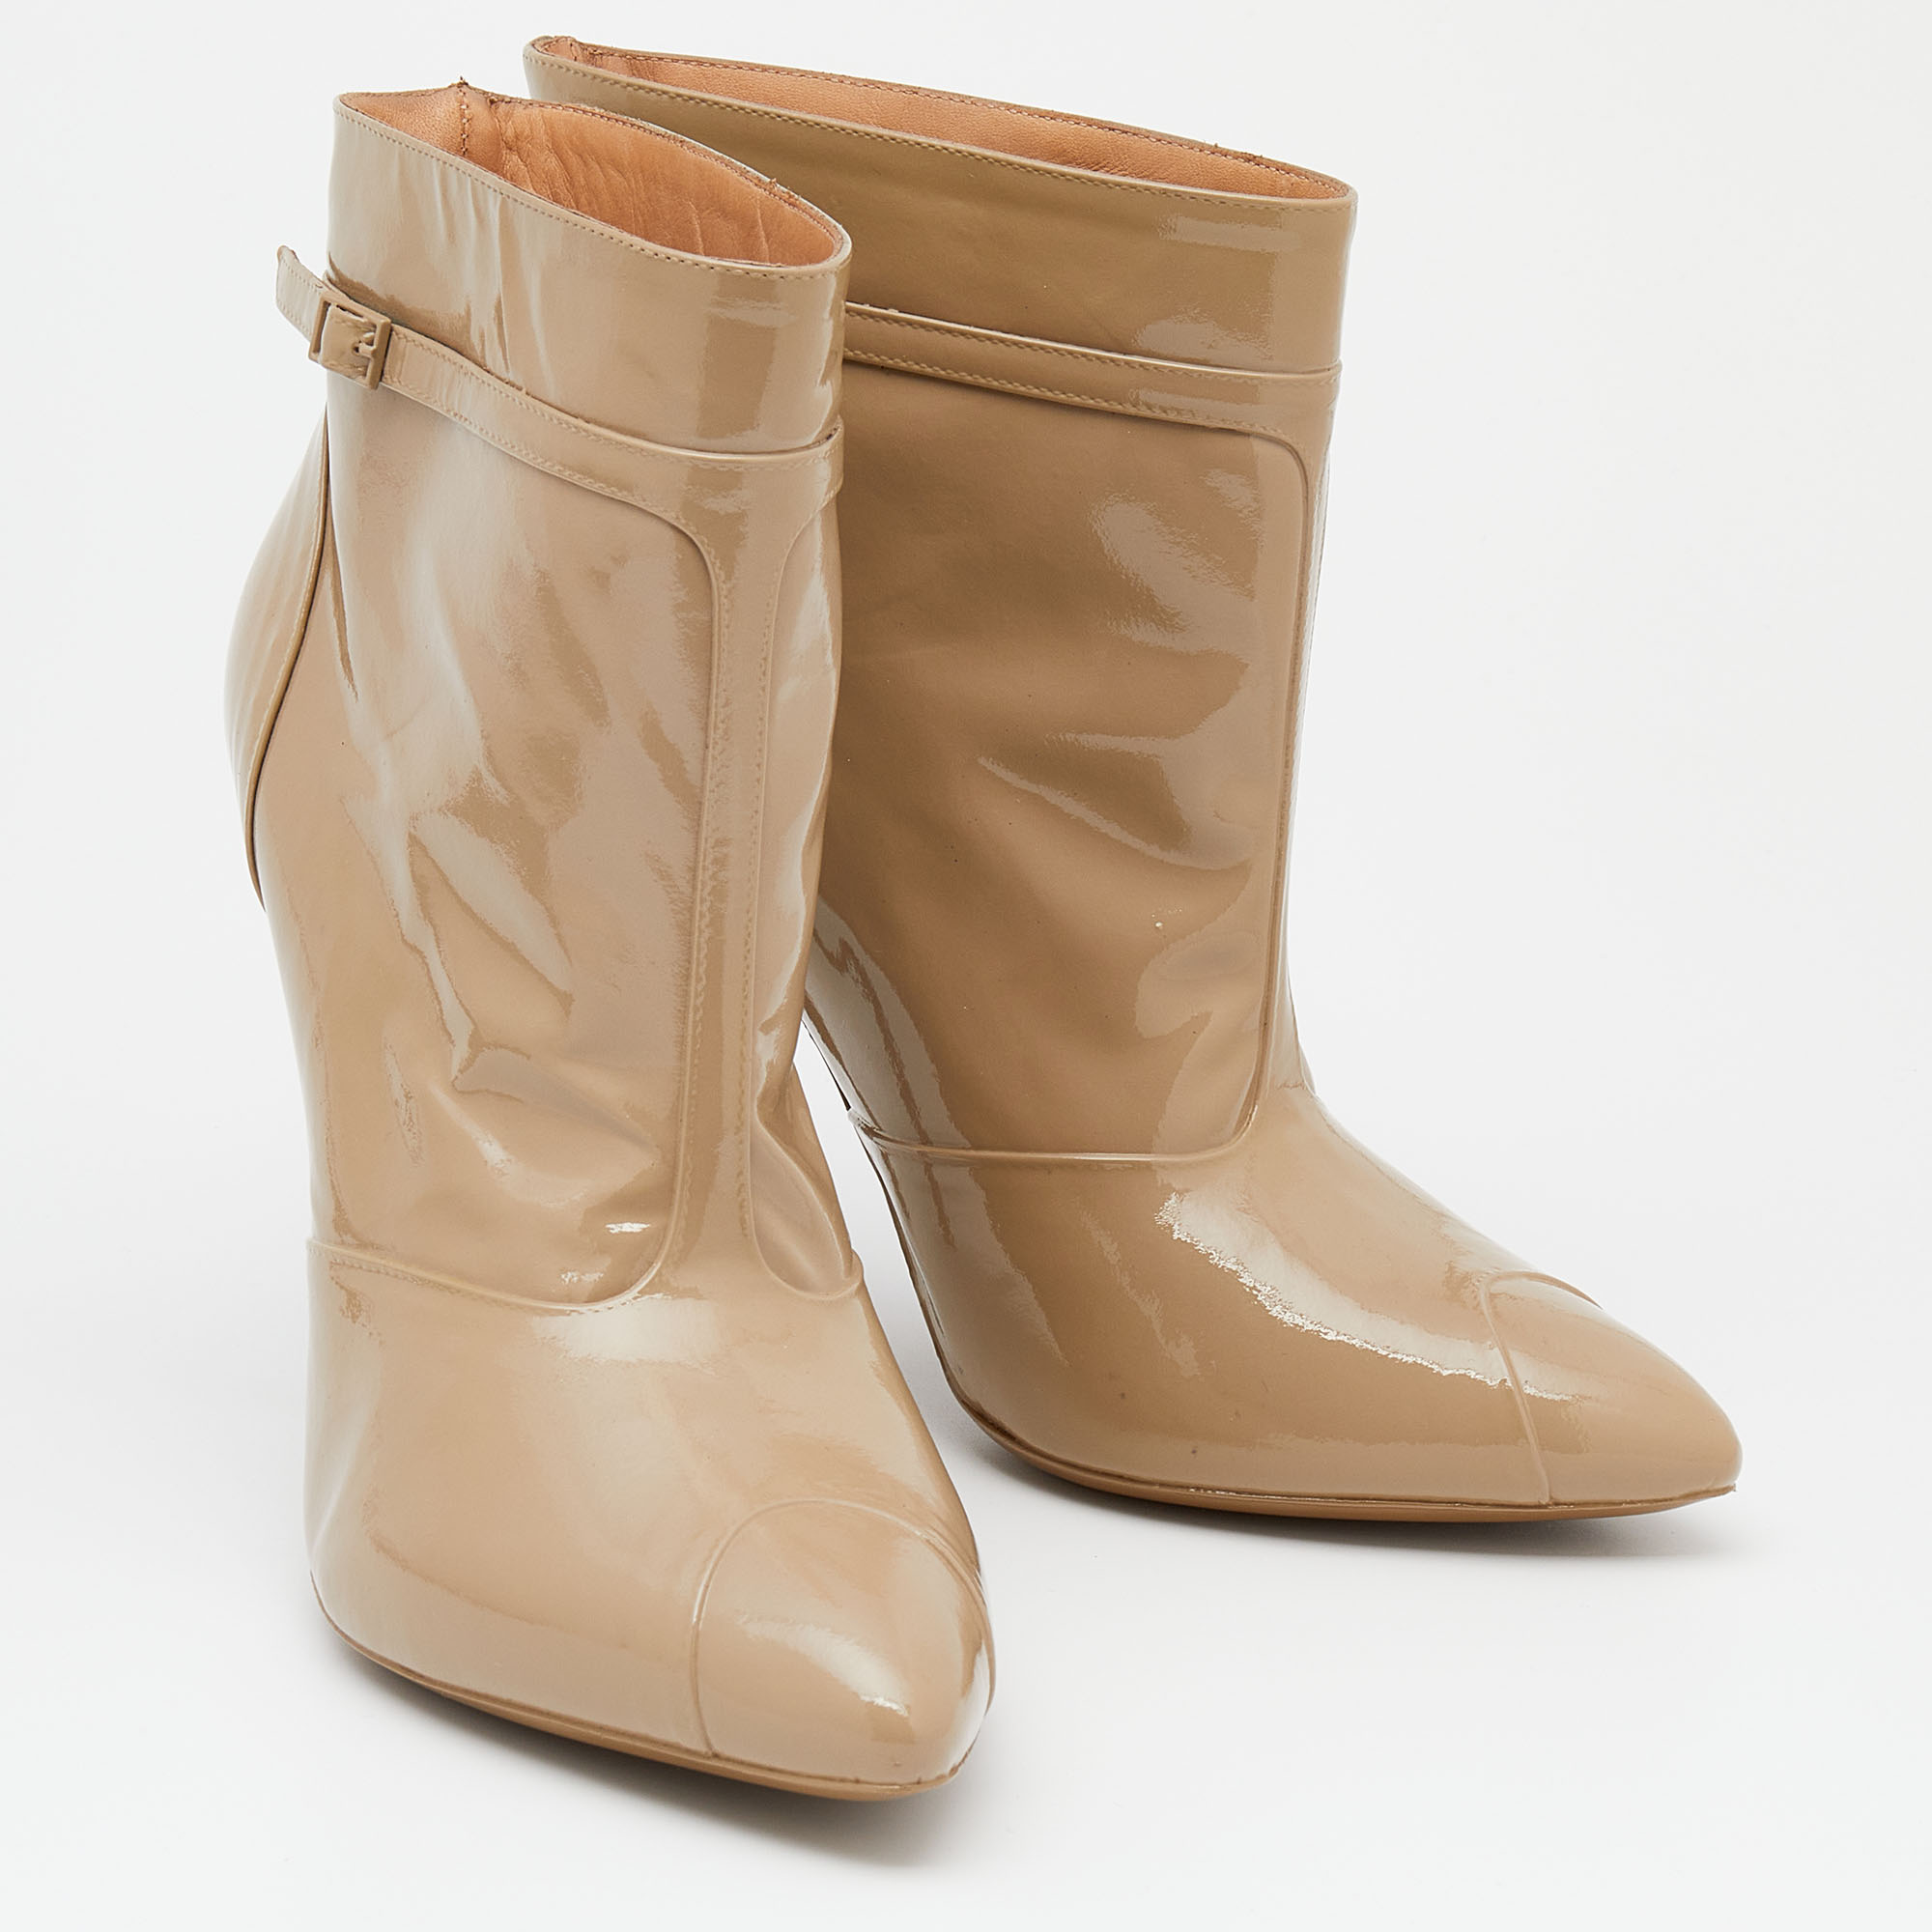 Maison Martin Margiela Beige Patent Leather Ankle Boots Size 37.5